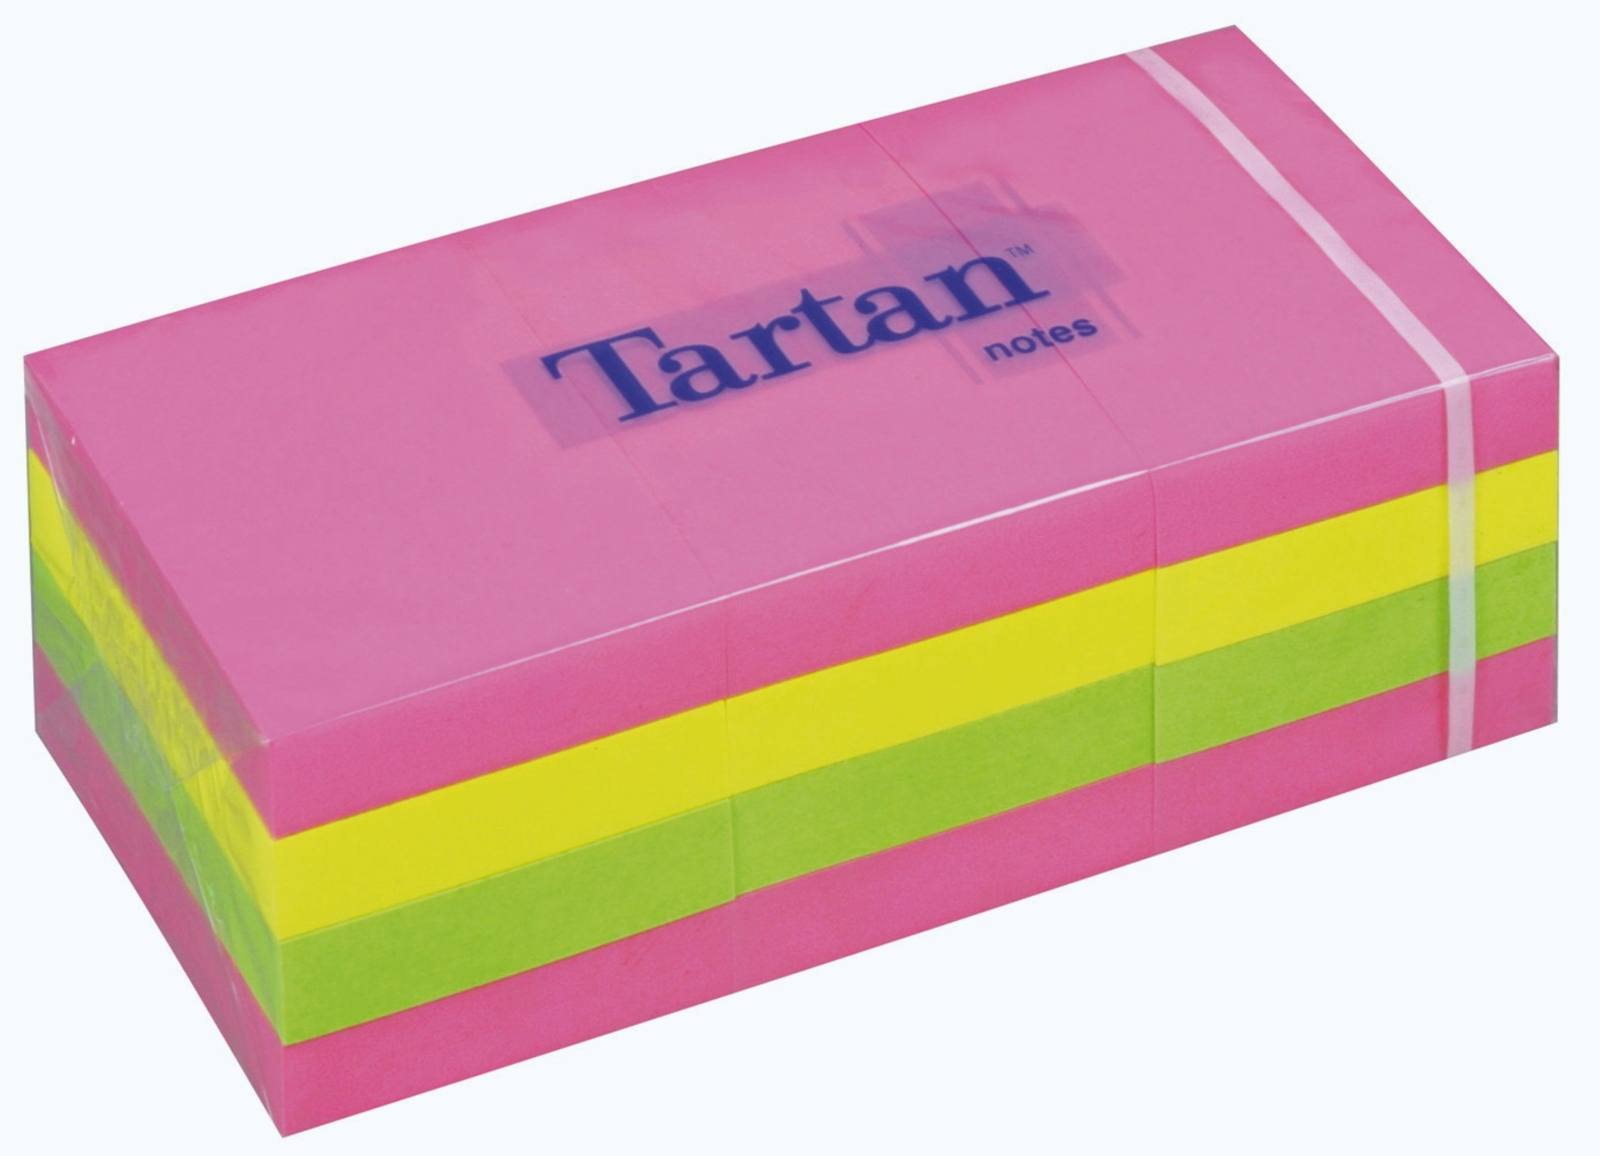 3M Tartan Notes 5138N, 51 x 38 mm, neon yellow, neon green, neon pink, 12 pads of 100 sheets each